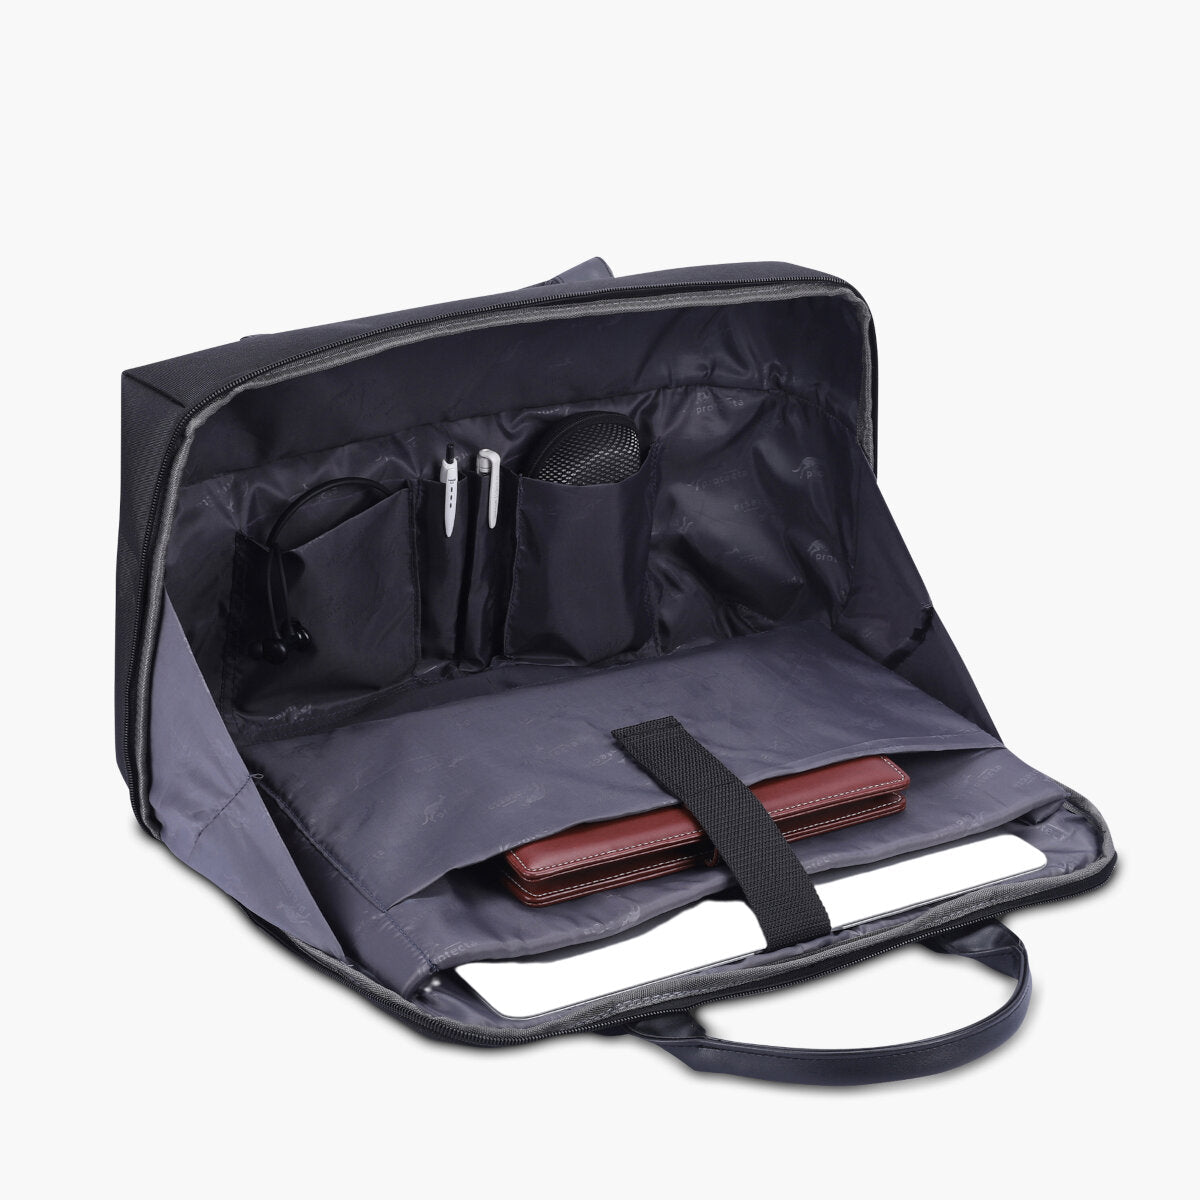 Black | Protecta Quest Anti-Theft Office Laptop Bag - Main